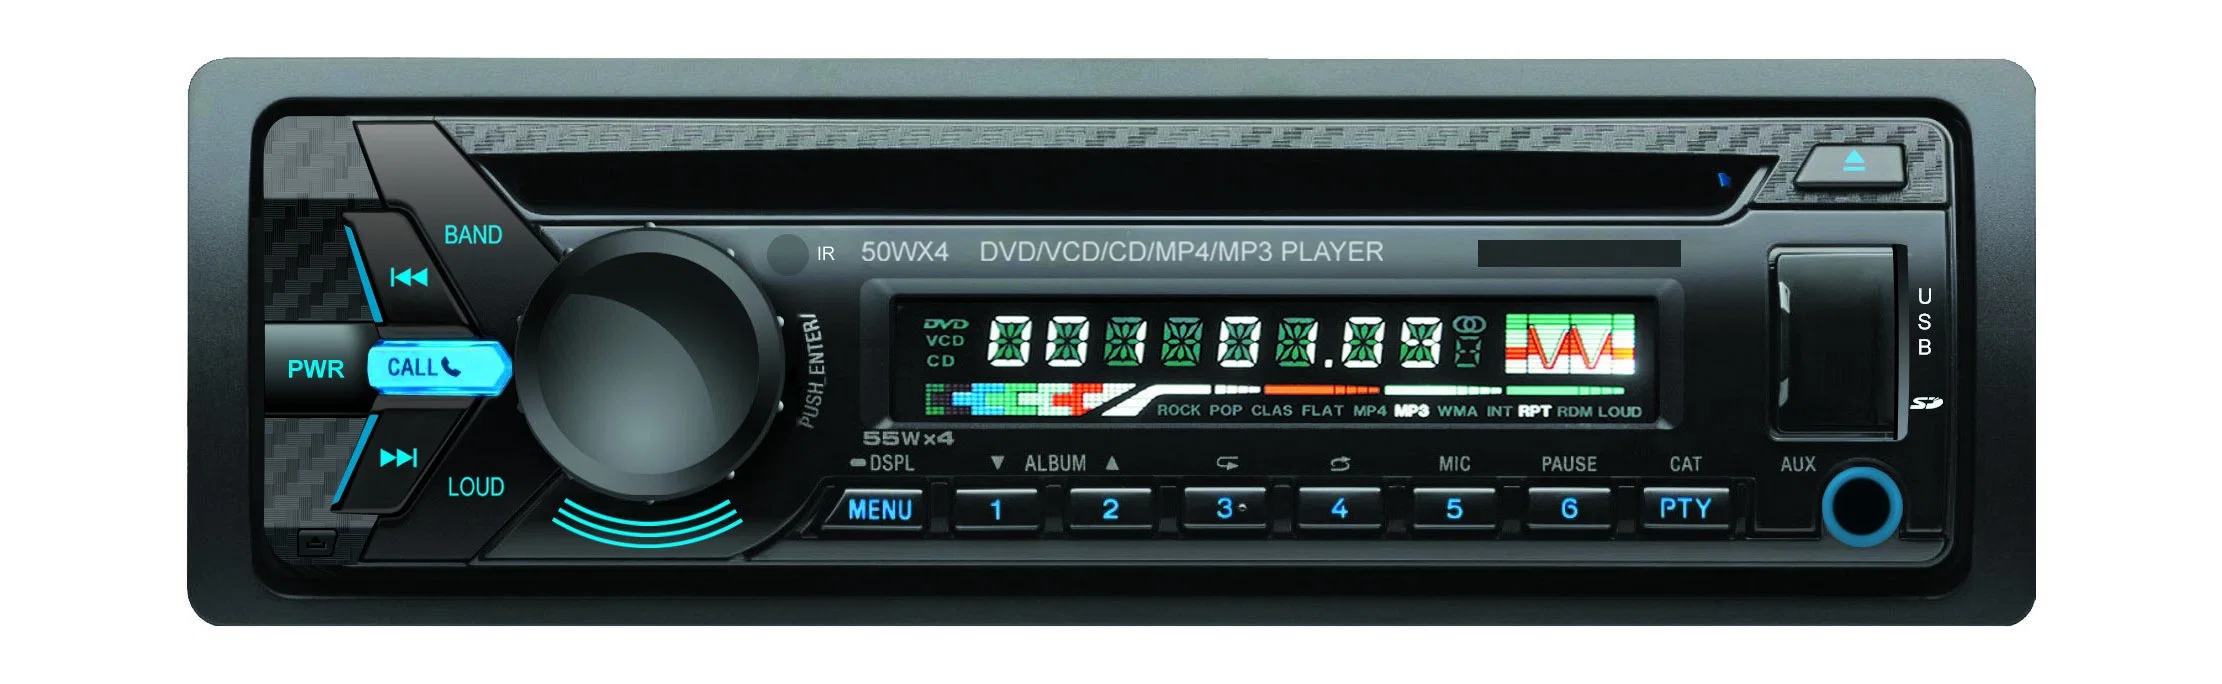 1 DIN Multimedia Digital Universal Car DVD Player